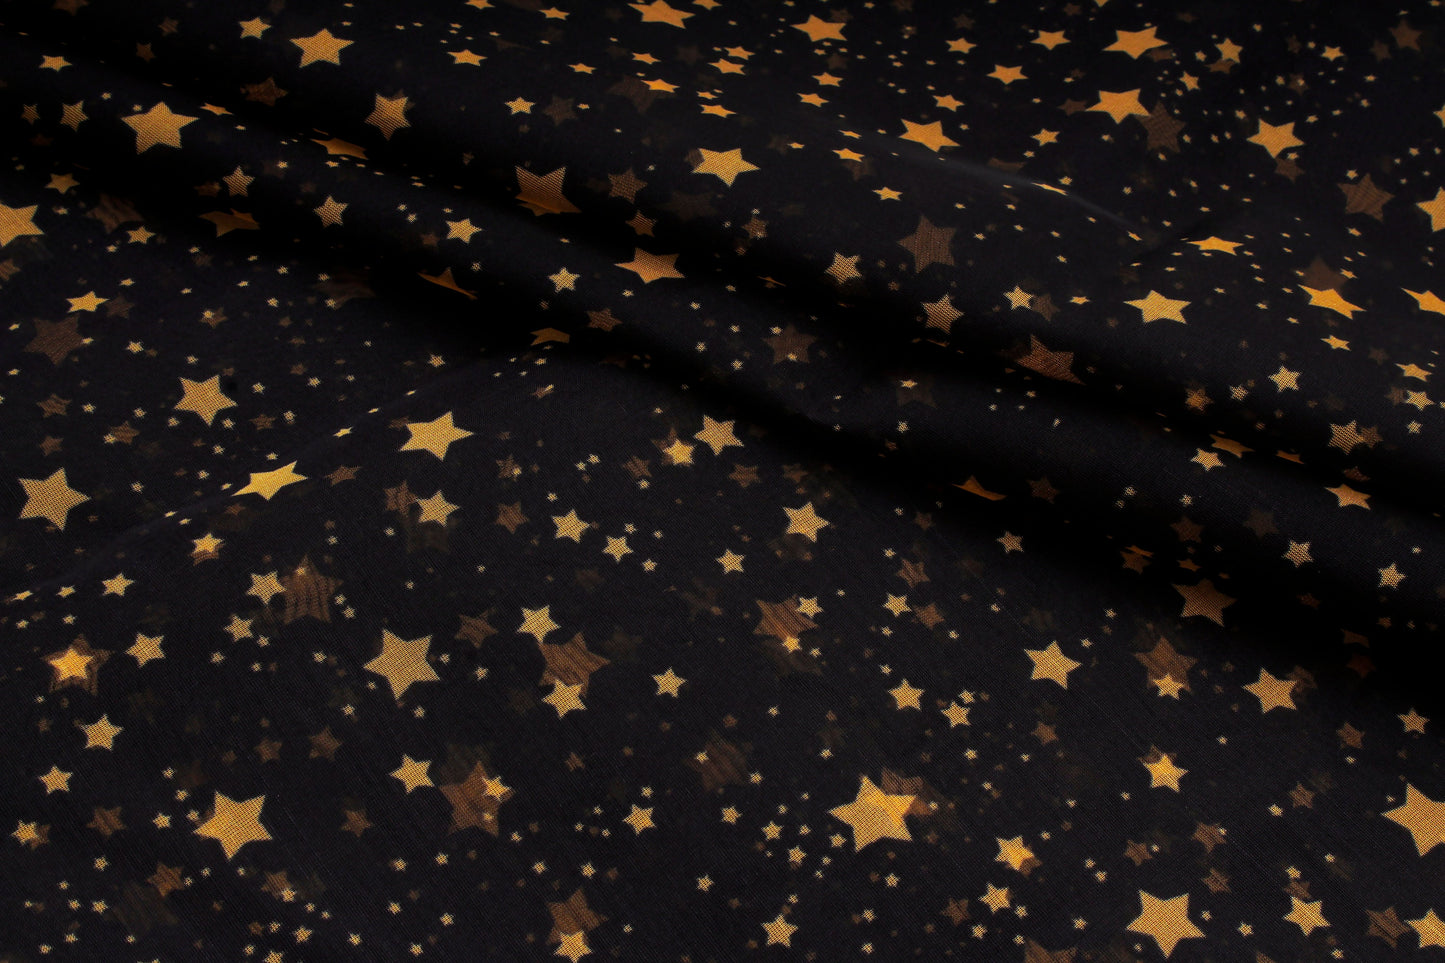 Black and Gold Star Print Organza Fabric